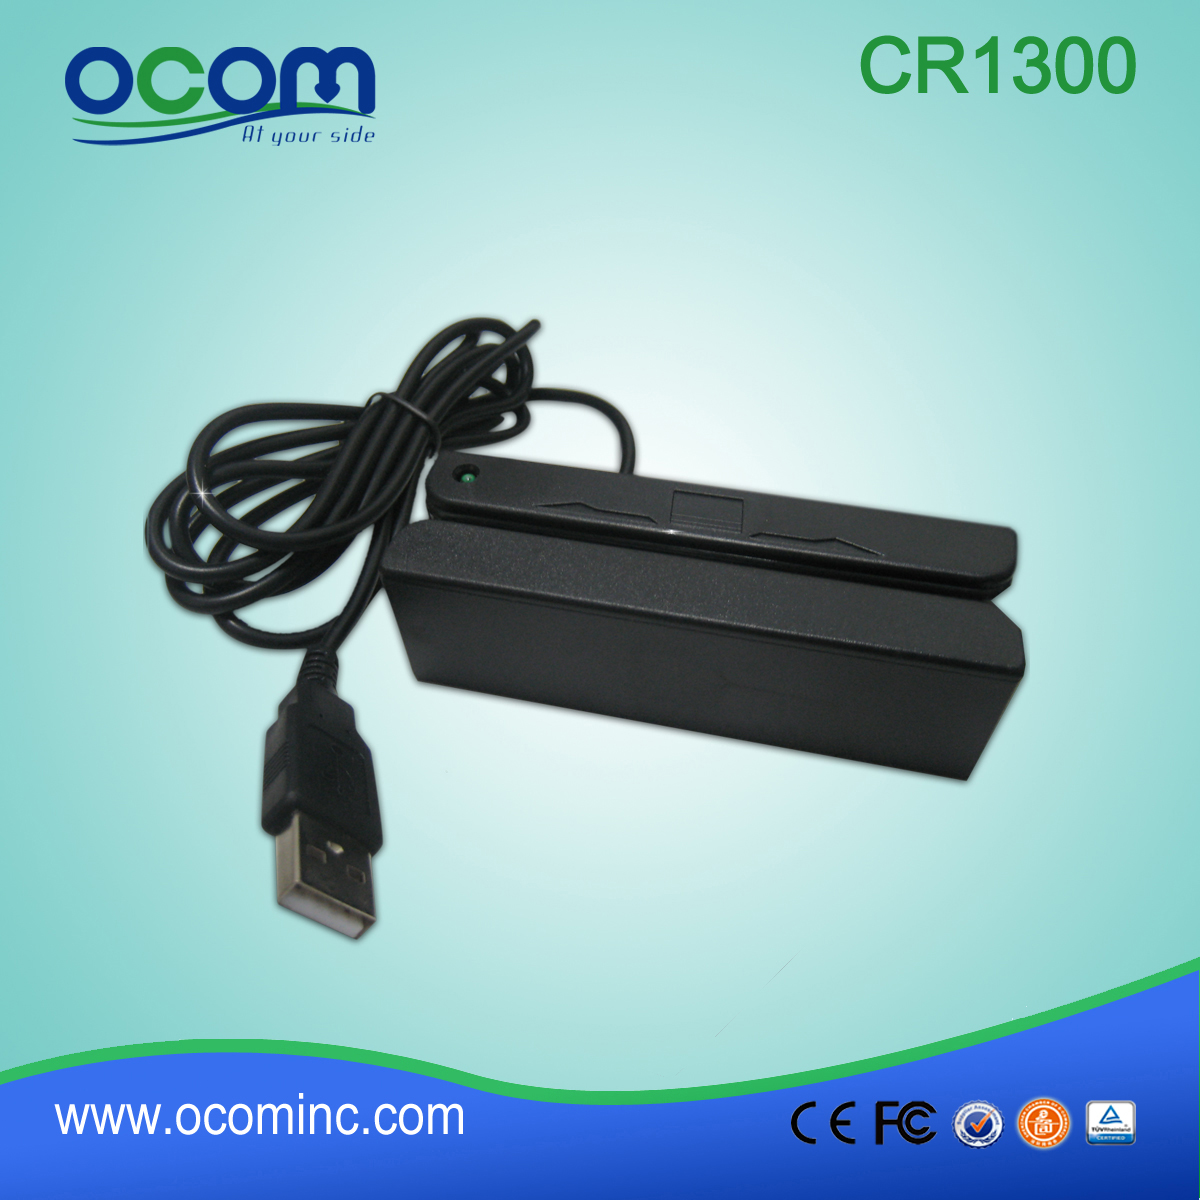 CR1300 OCOM lector de tarjetas magnéticas para GPS tracker